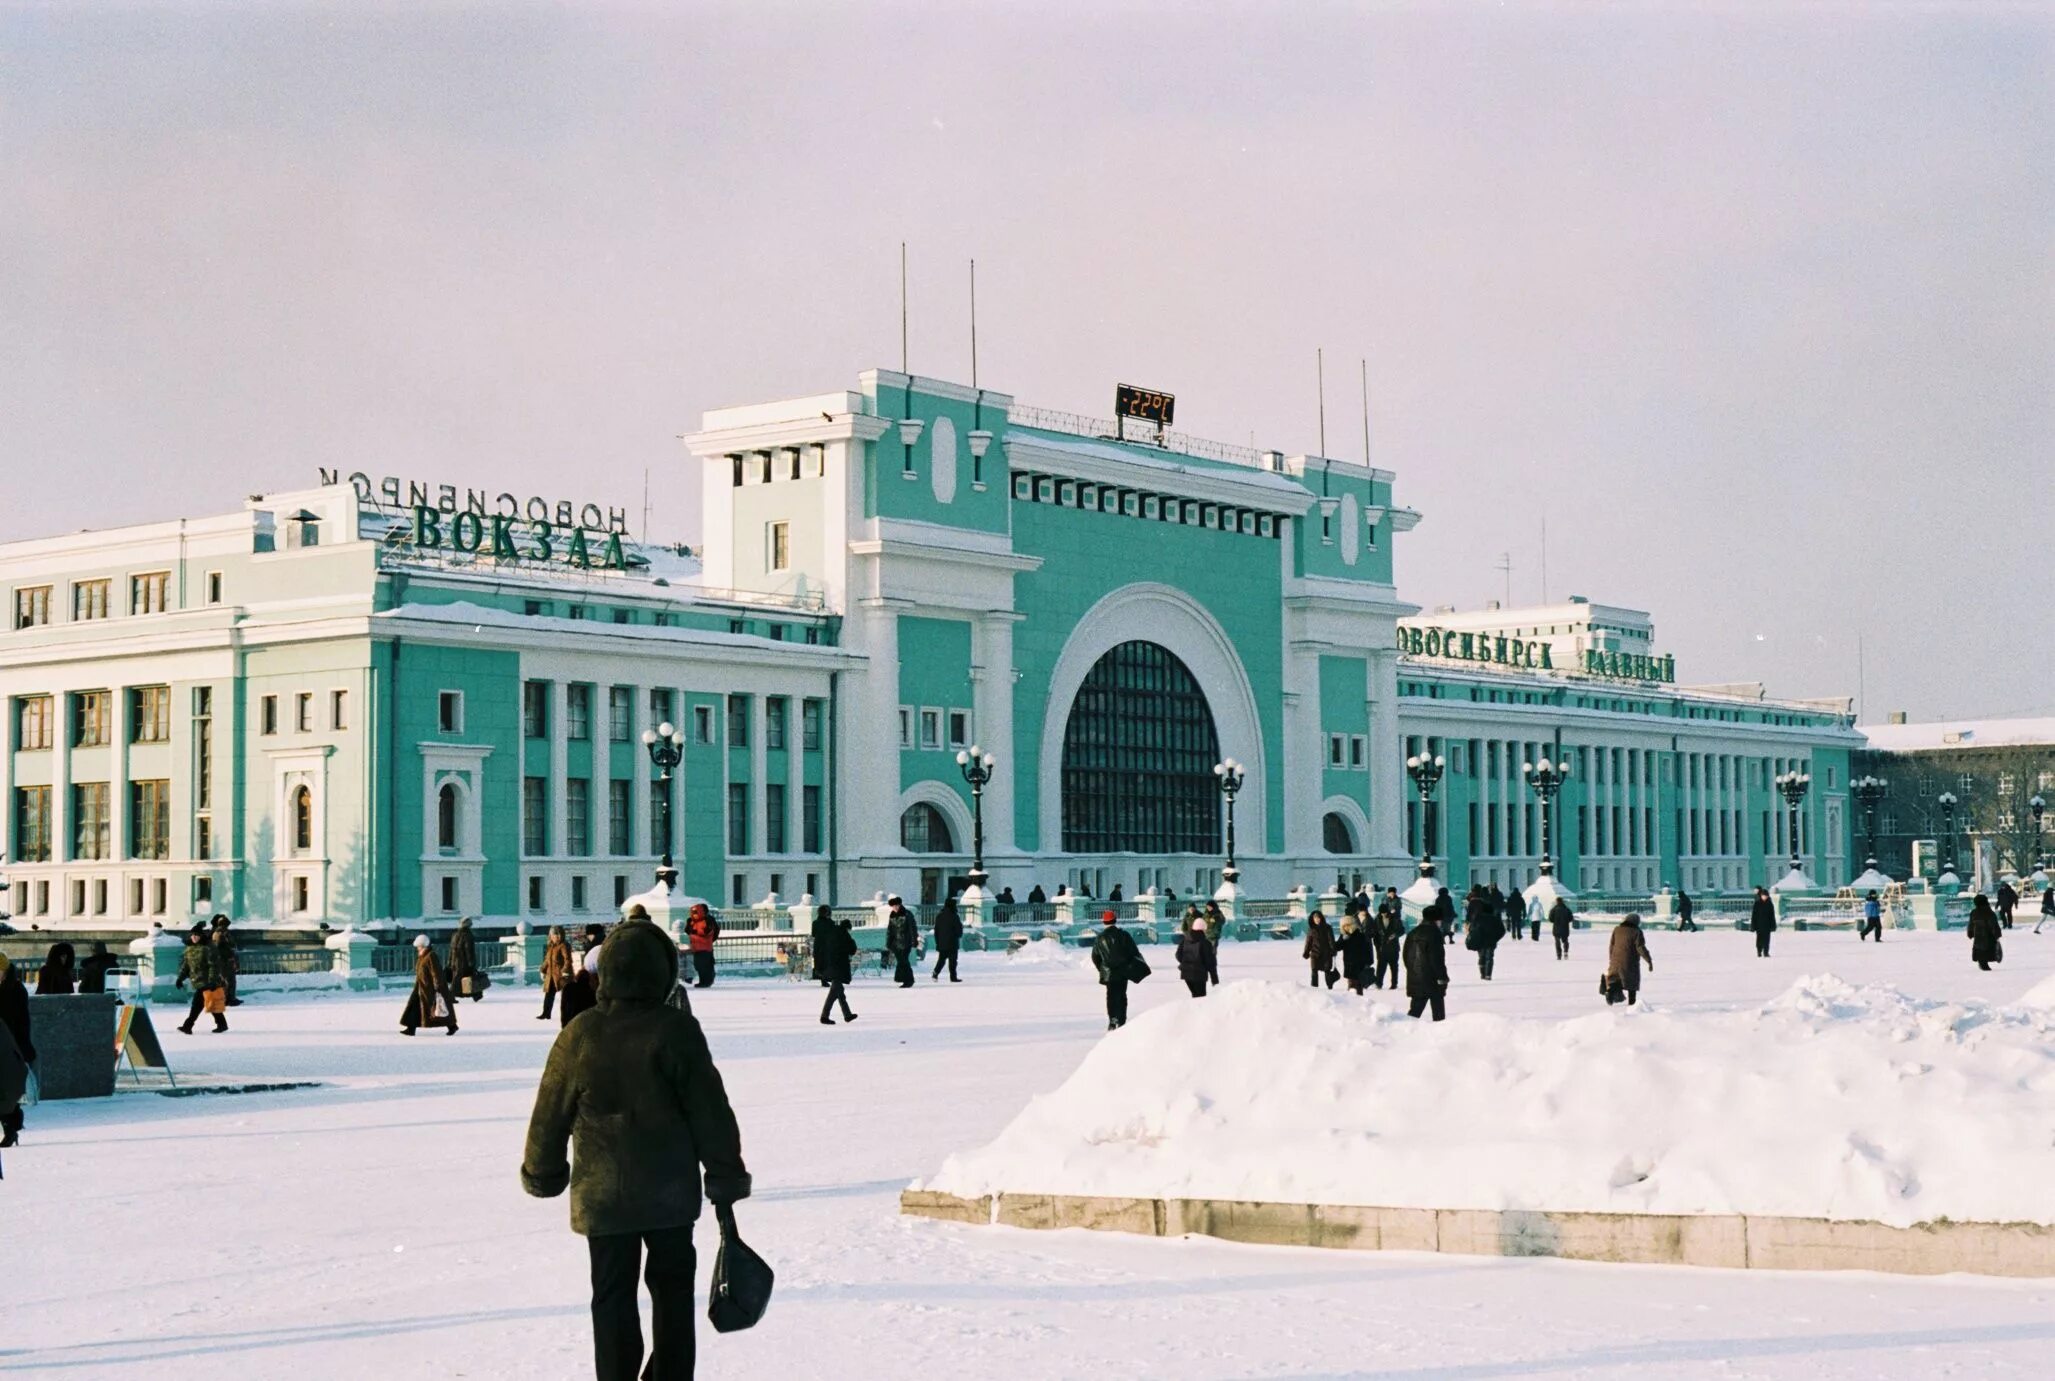 ЖД вокзал Новосибирск зимой. Станция Новосибирск-главный, Новосибирск. Новосибирск вокзал главный зима. Новосибирский ЖД вокзал зимой. Новосибирск полное название